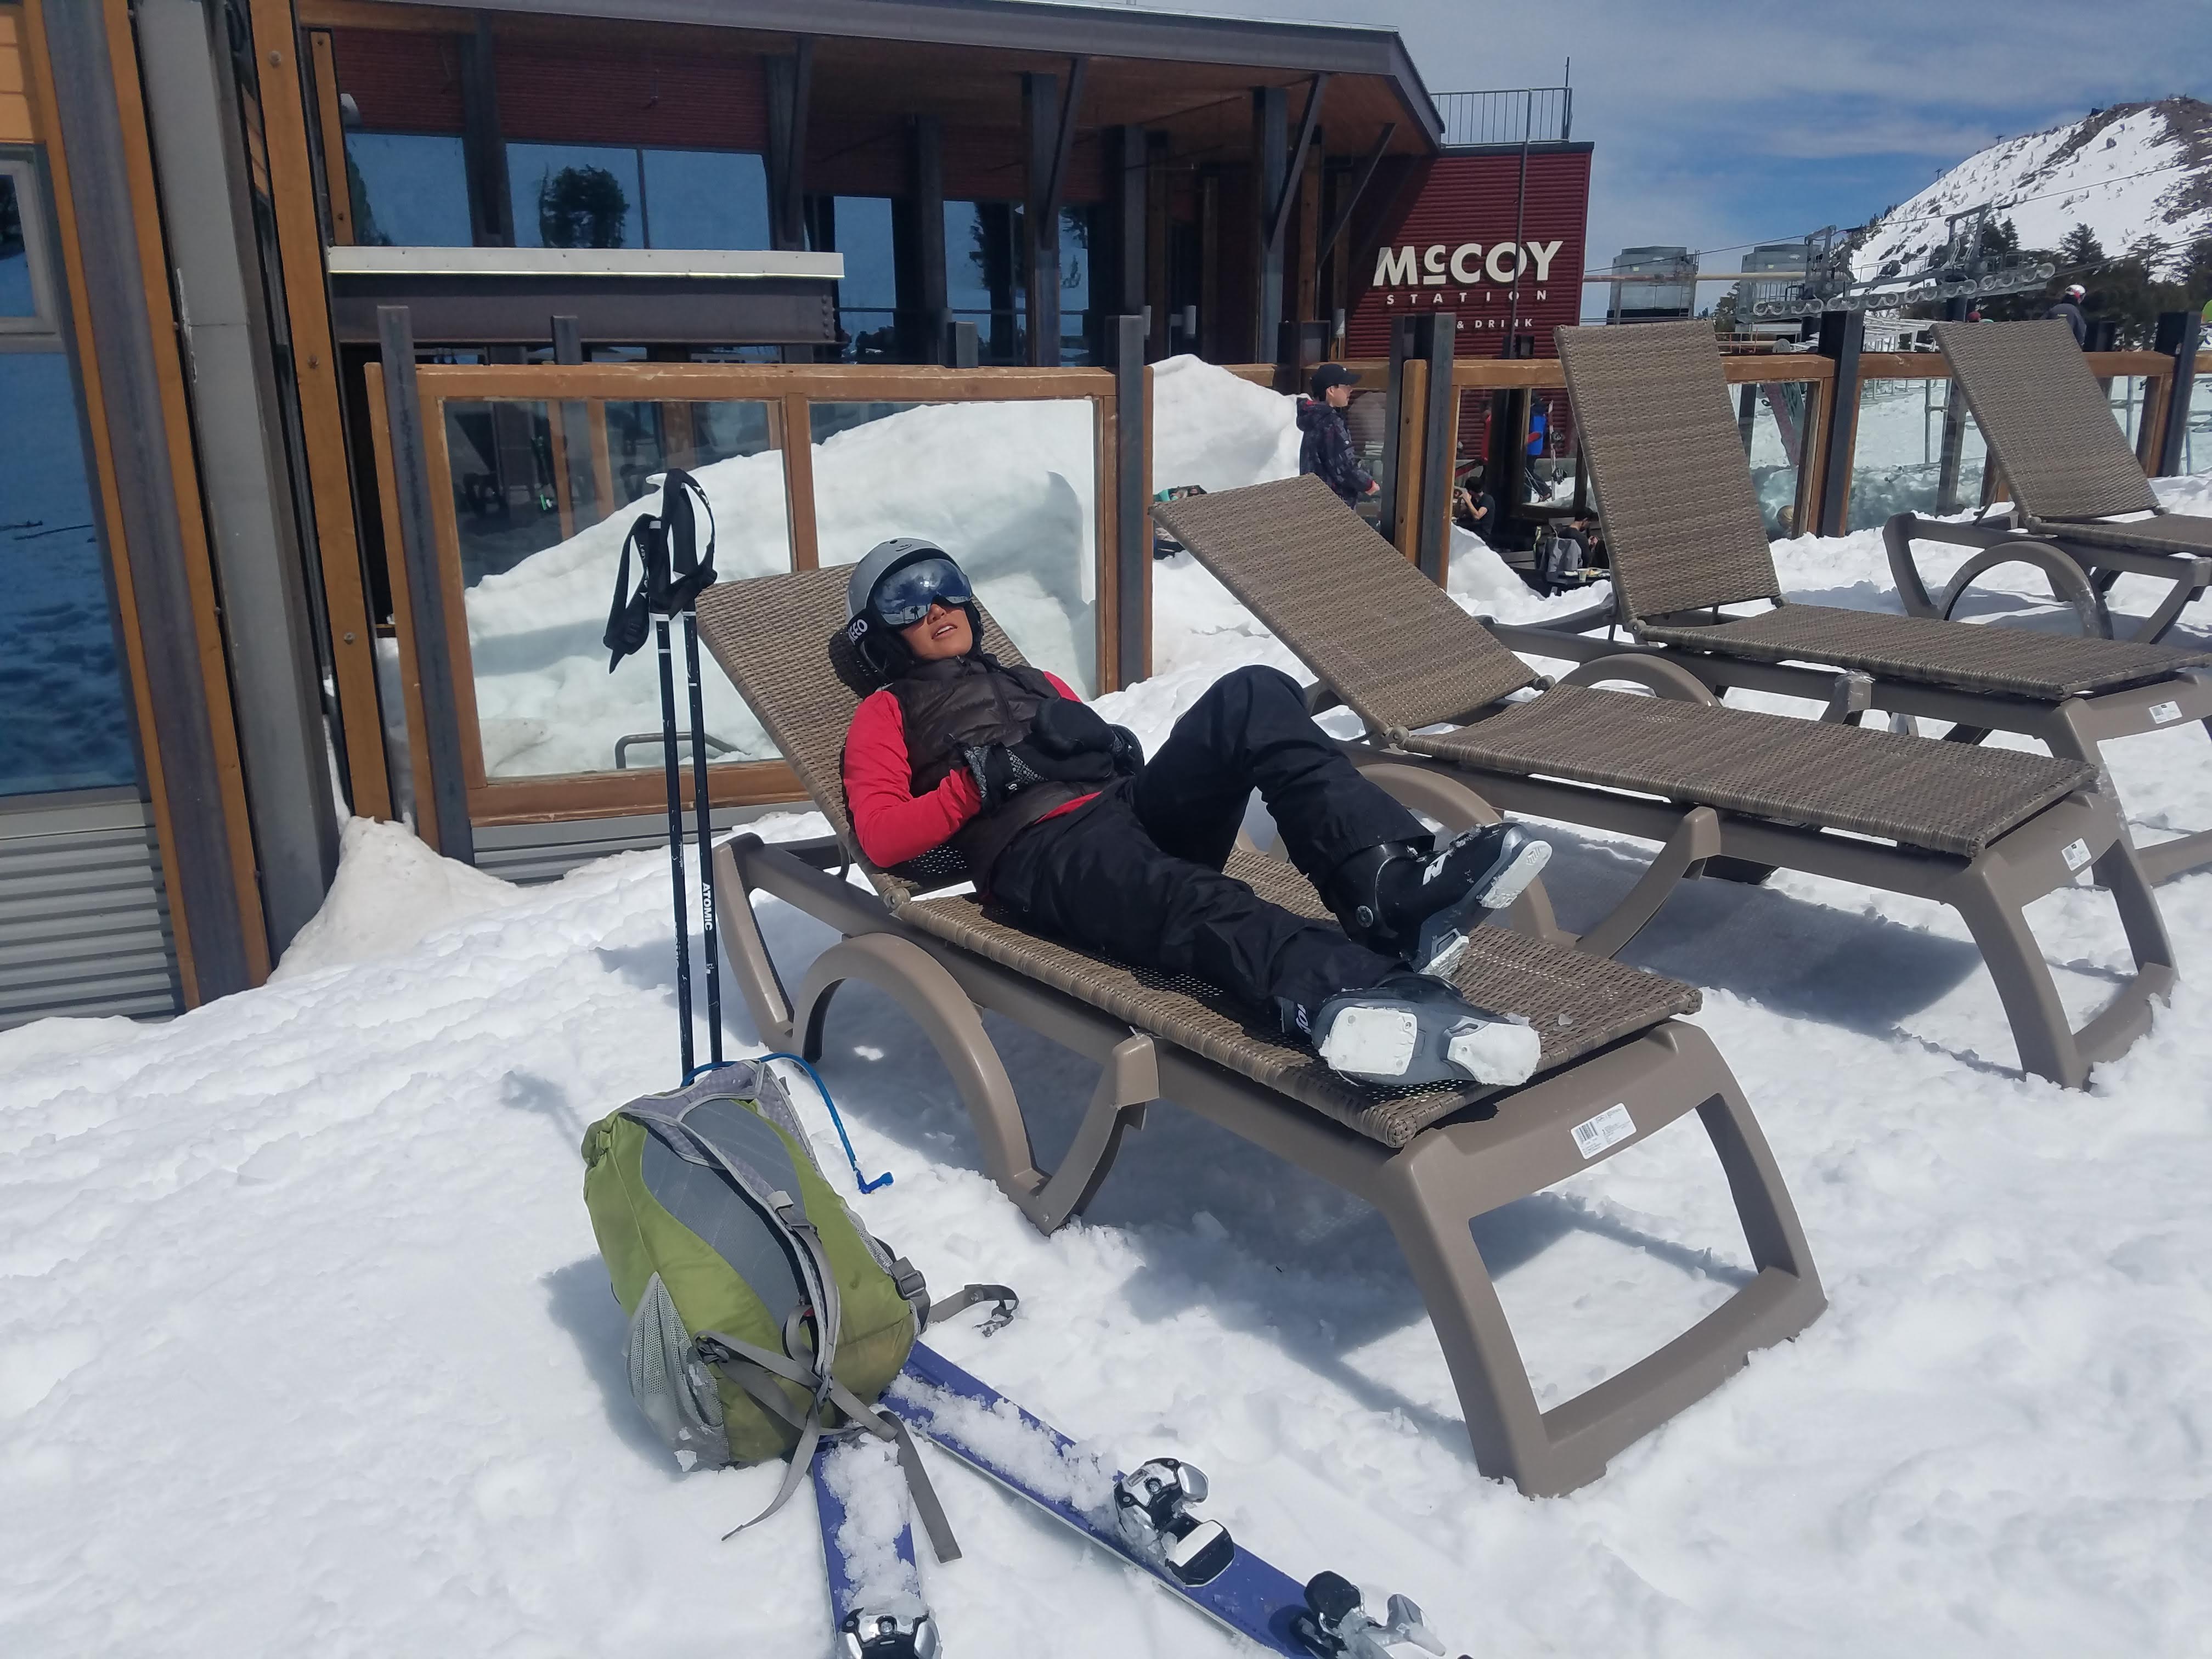 Apres ski lounge.